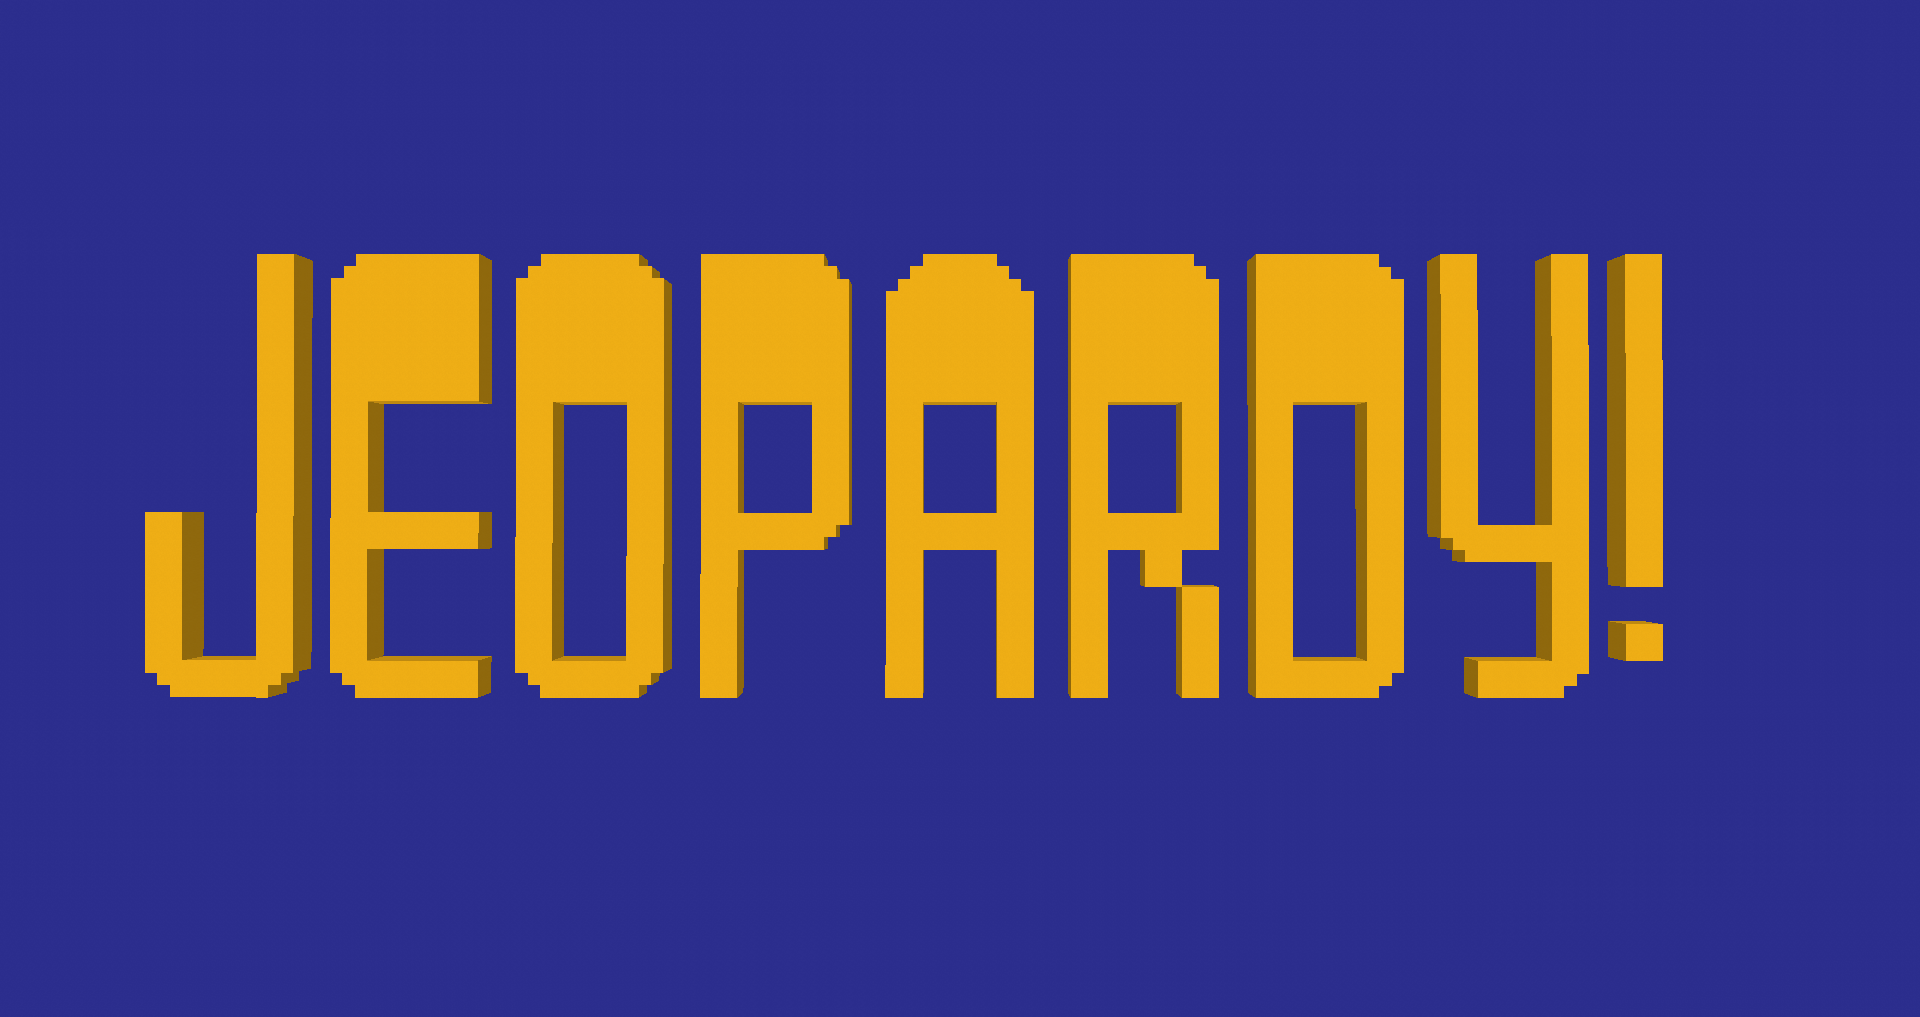 Jepardy Logo - So I made the J! logo in Minecraft